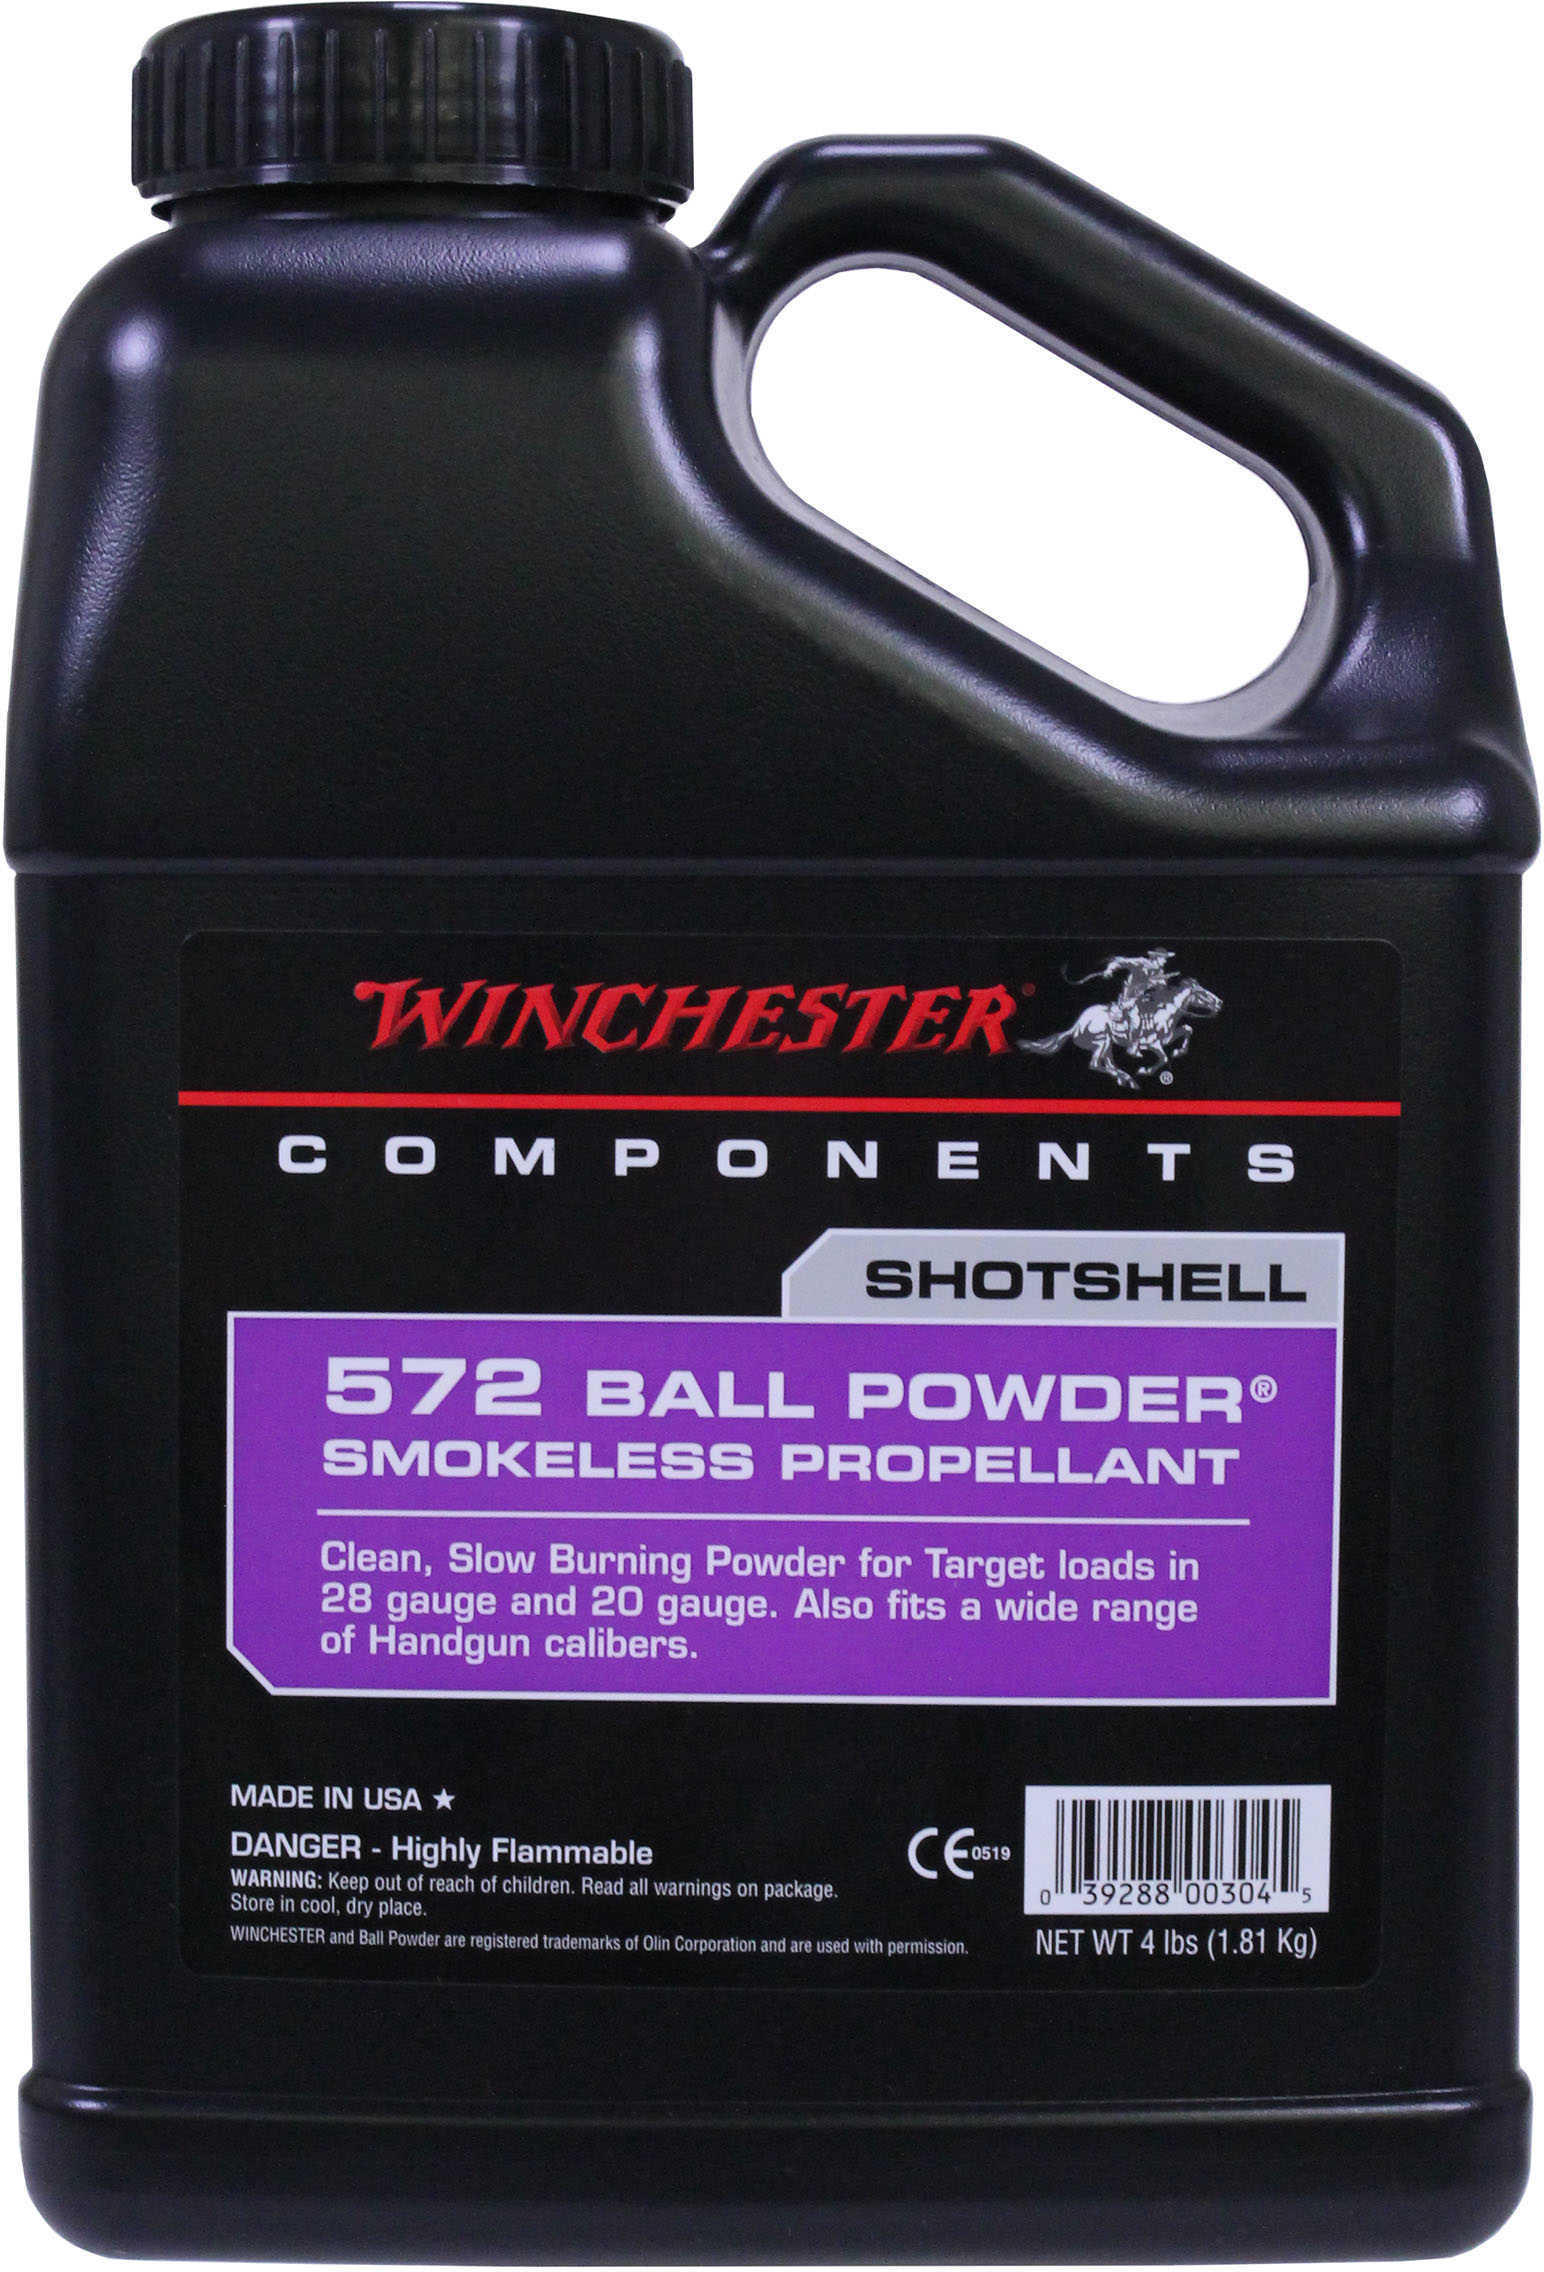 Winchester Powder 748 Smokeless 1 Lb